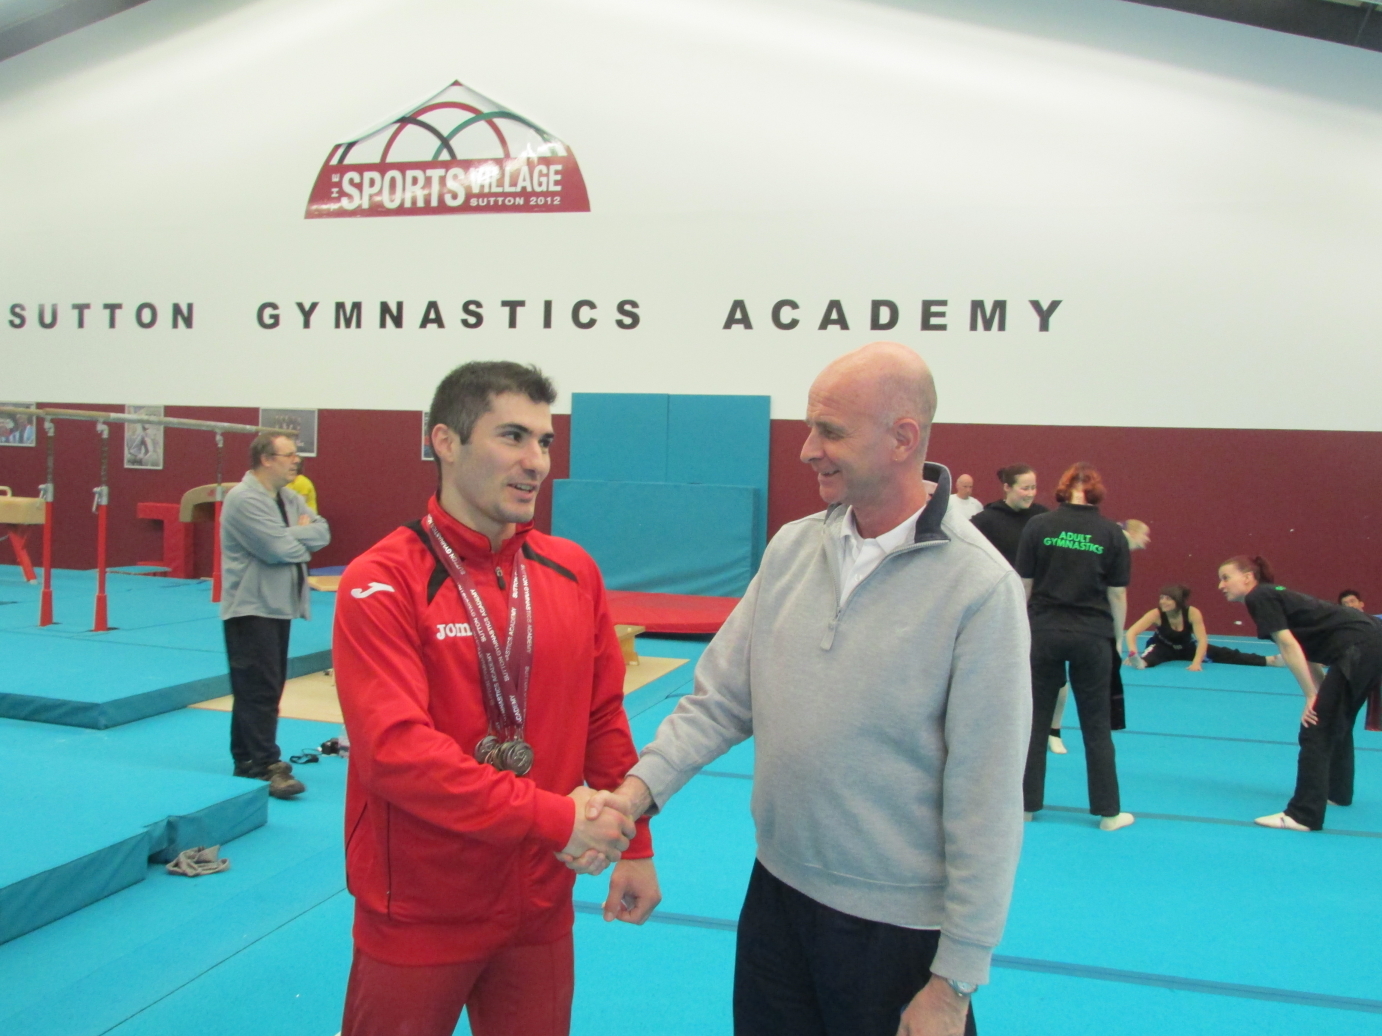 Stef with coach Maurice at Sutton Gymnastics Academy